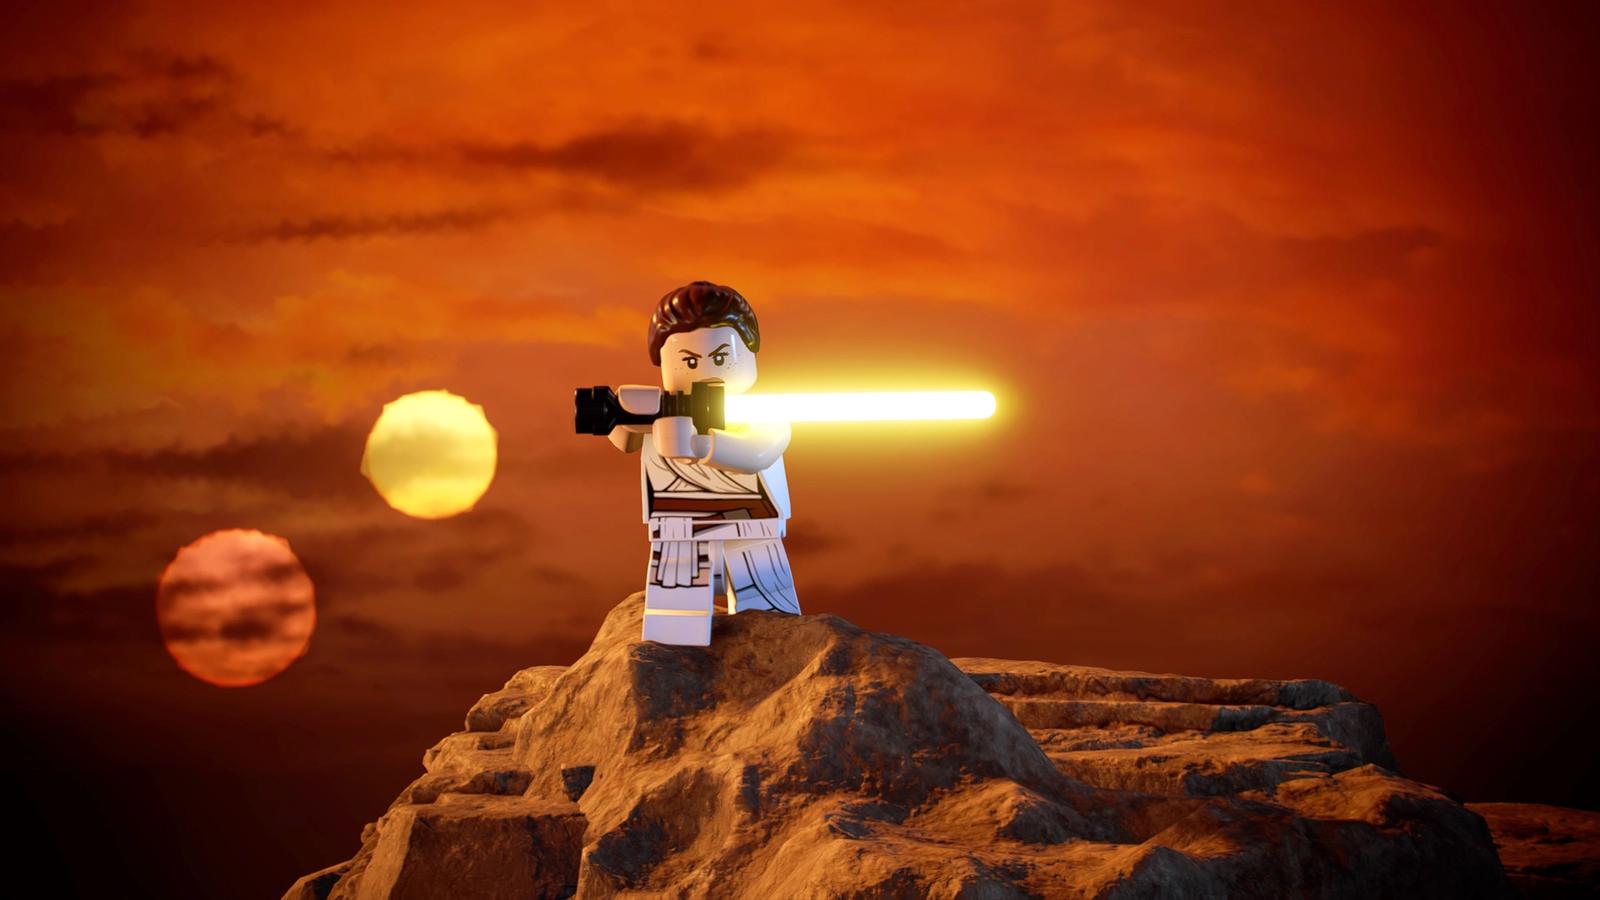 Rey stands wielding her lightsaber in Lego Star Wars: The Skywalker Saga.